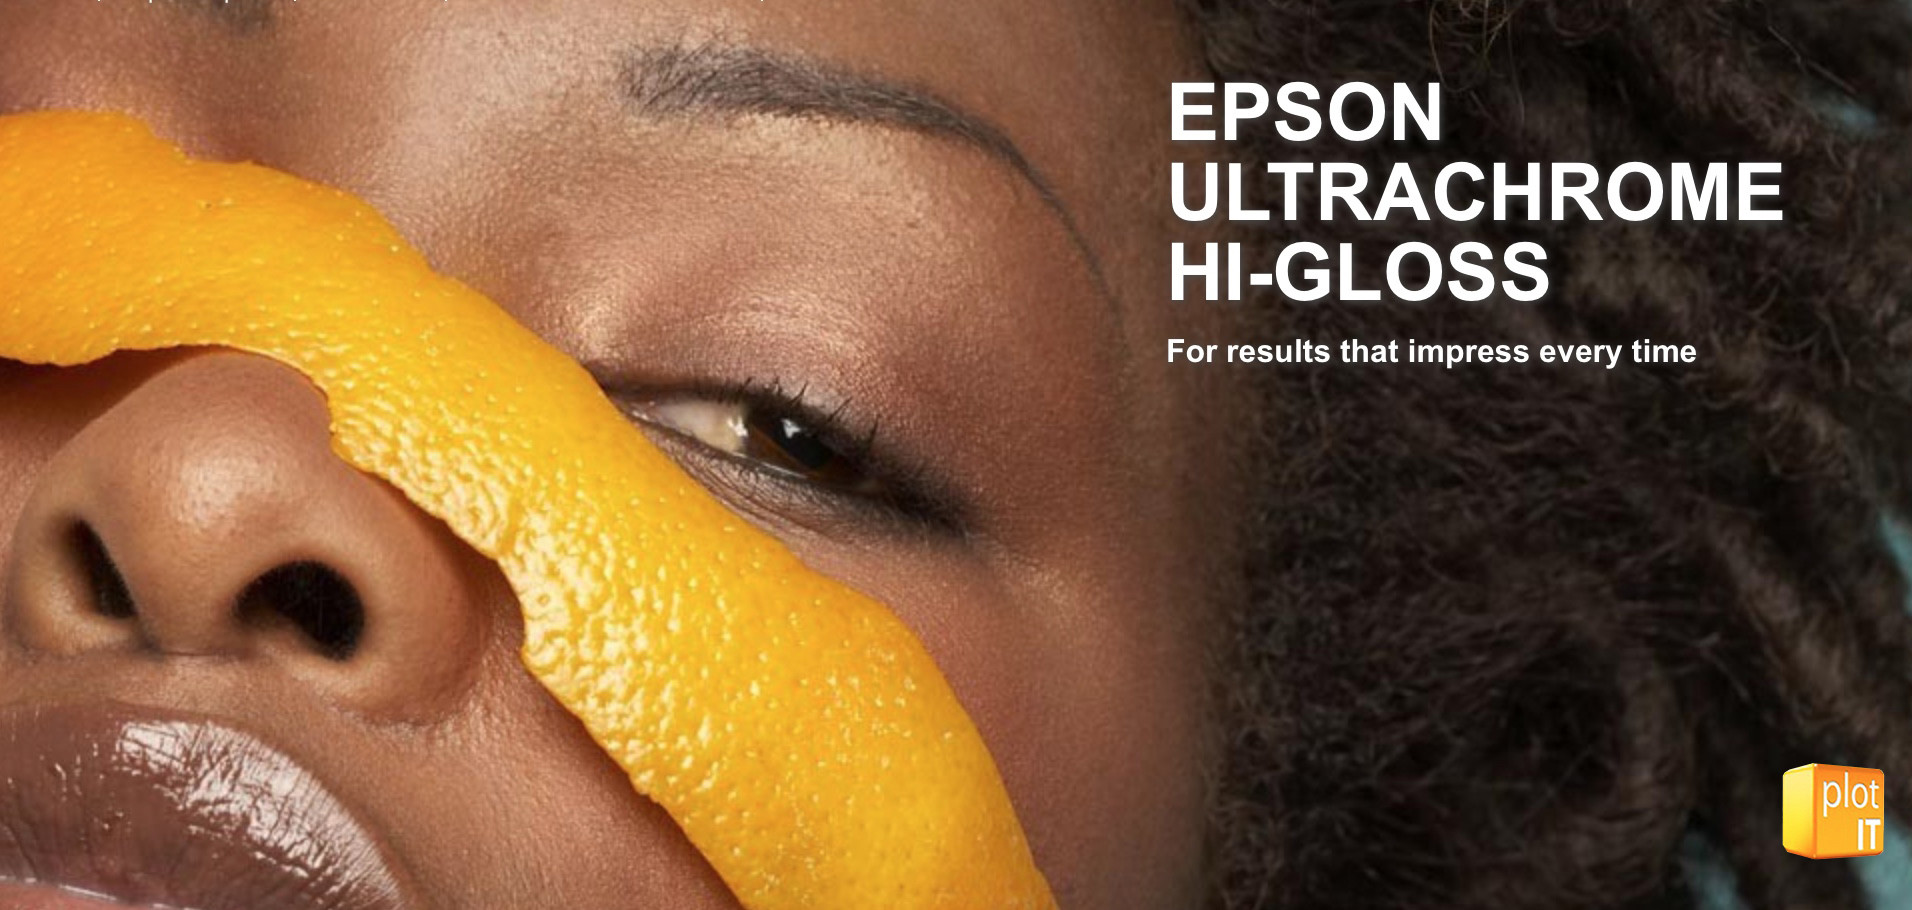 Epson UltraChrome Hi-Gloss2 Ink_PLOT-IT